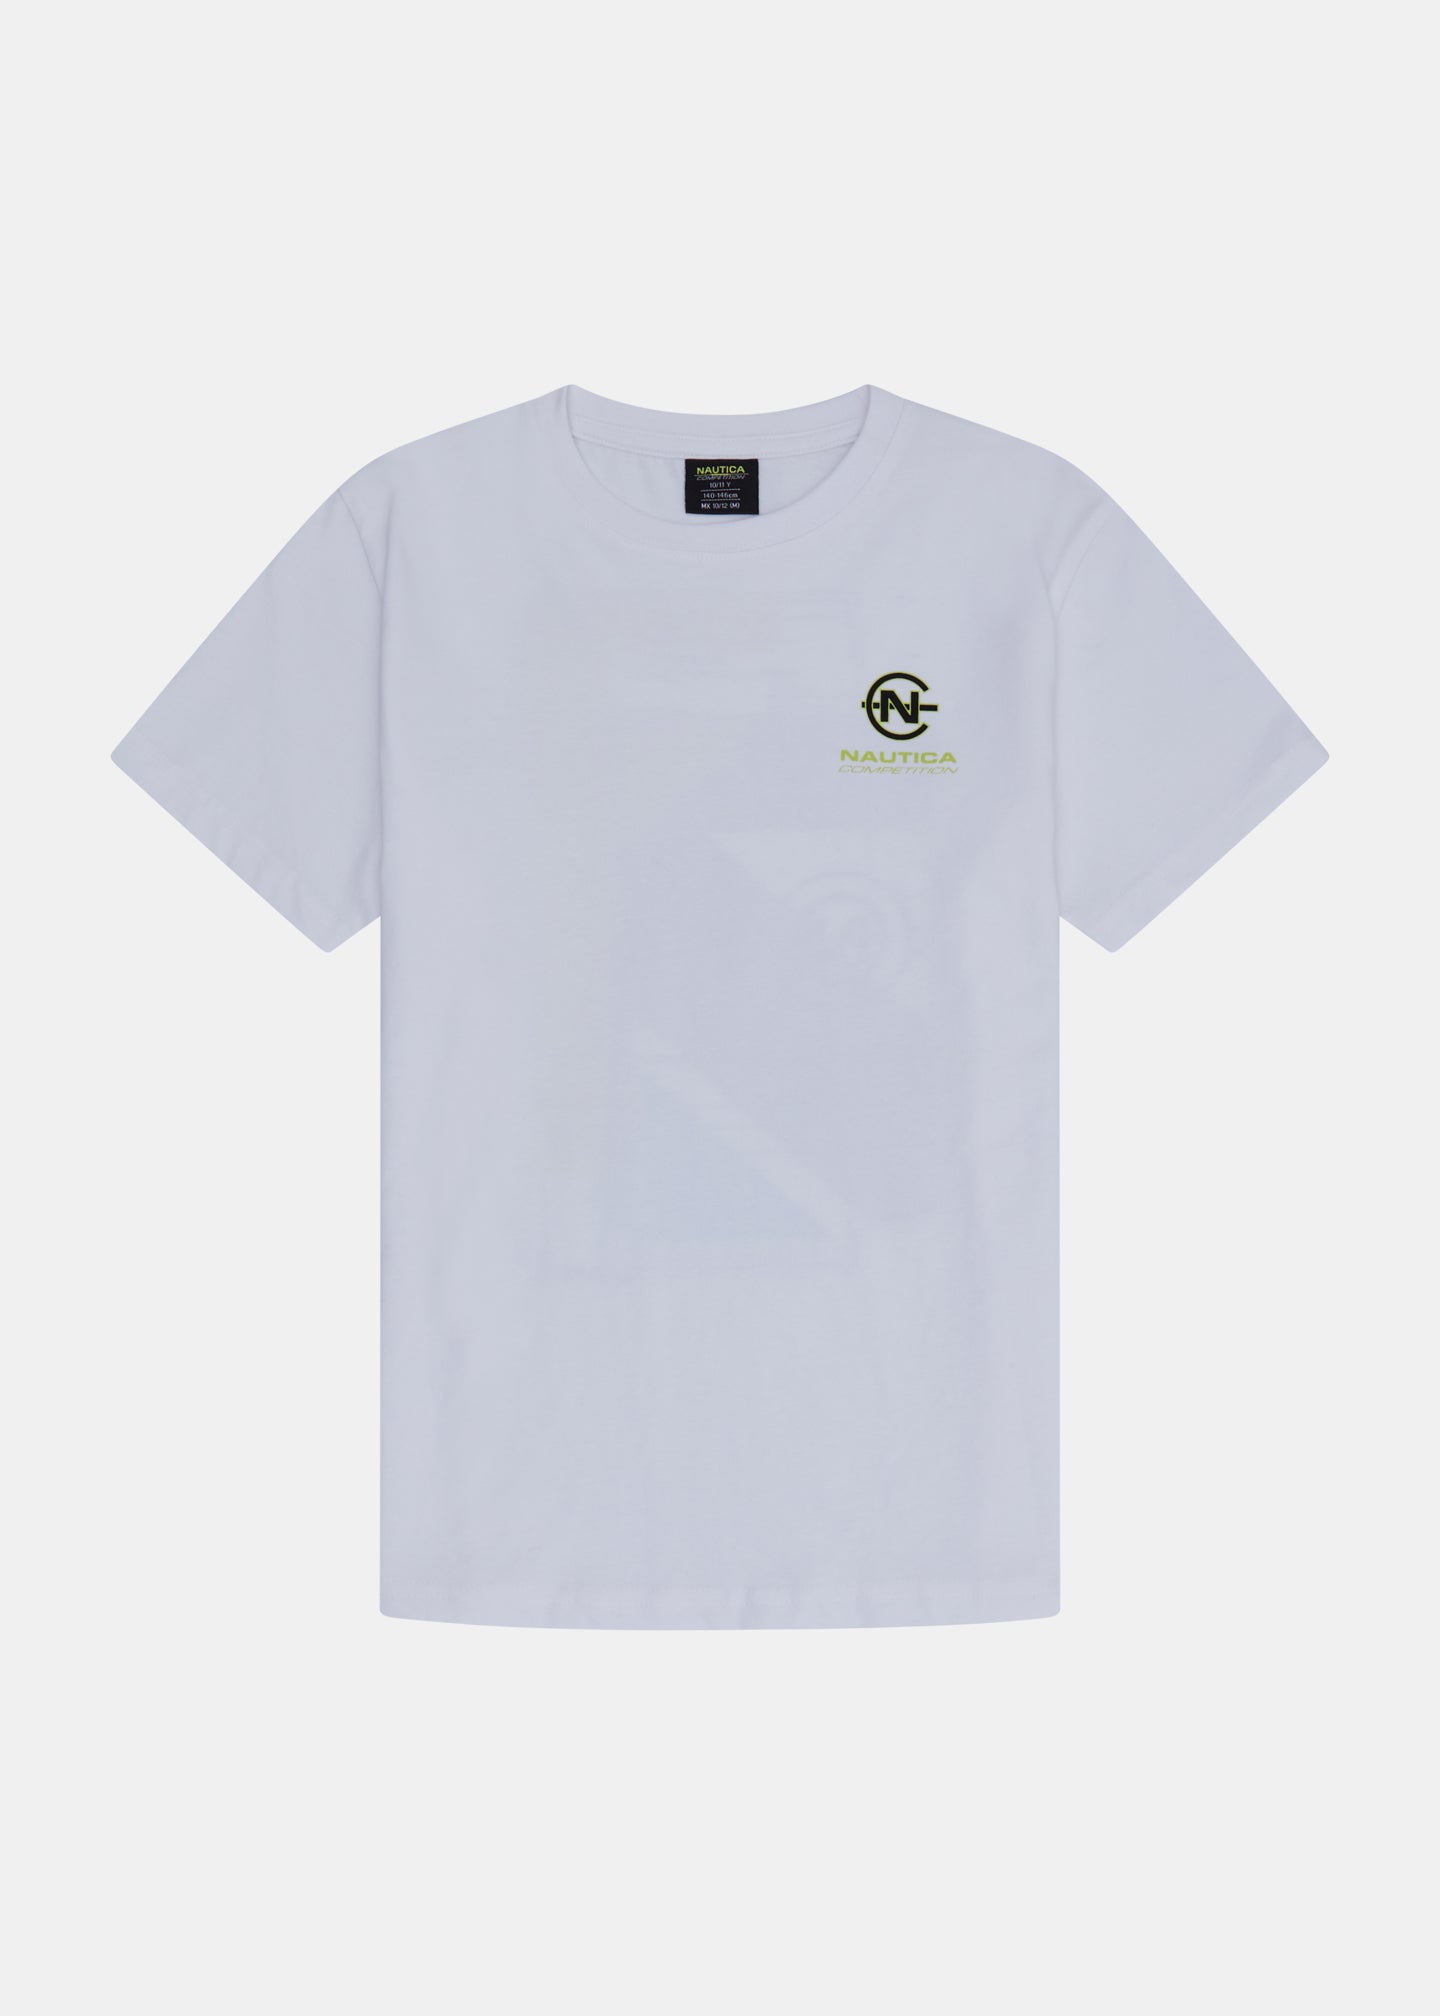 Buy Nautica kids boy crew neck long sleeve brand logo t shirt white Online